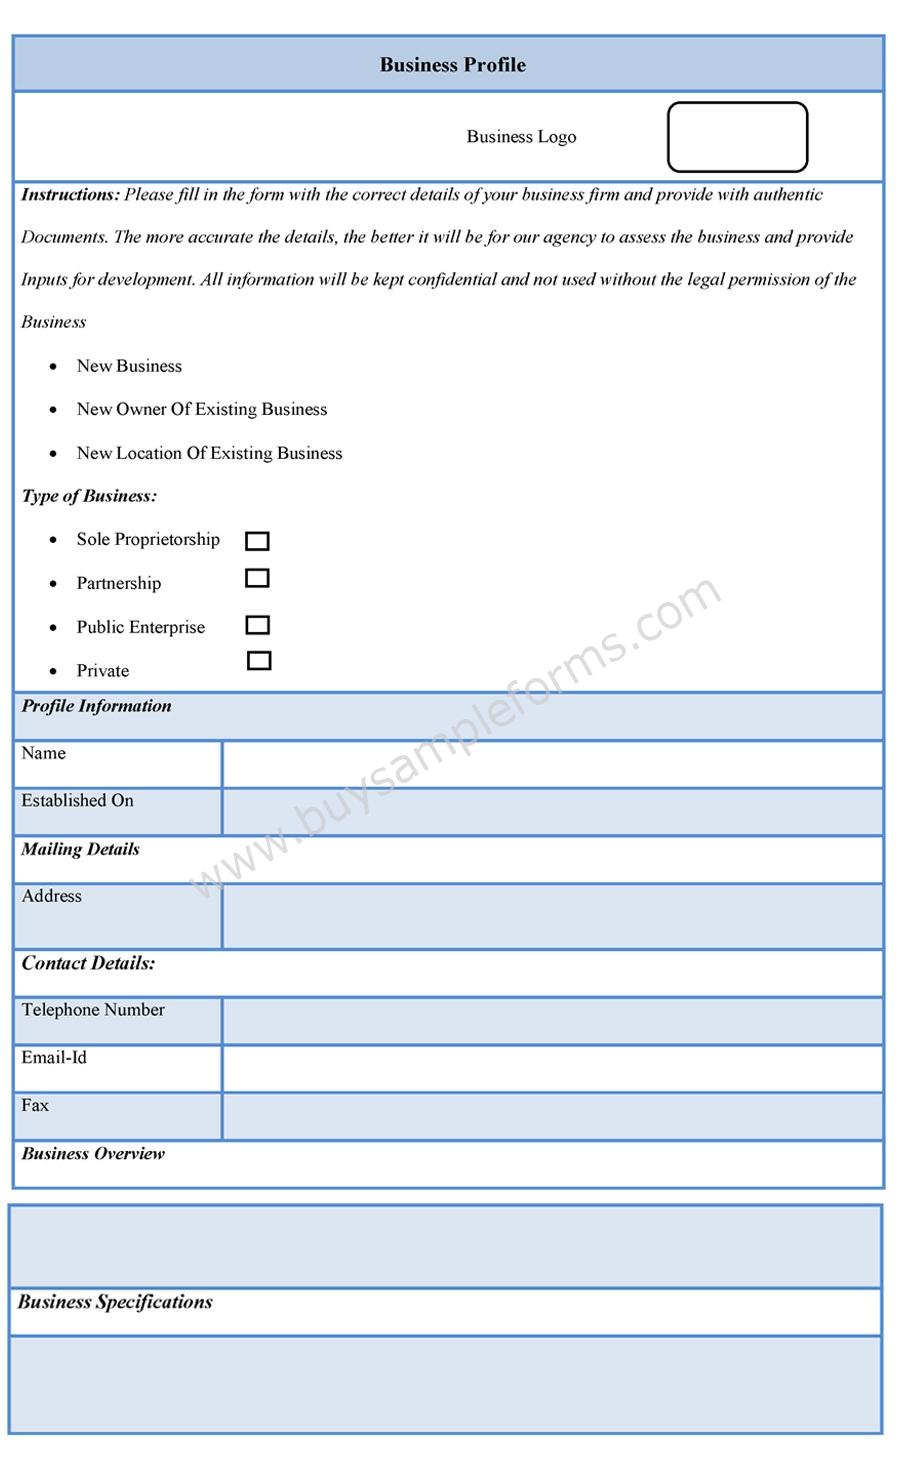 Business Profile Form sample